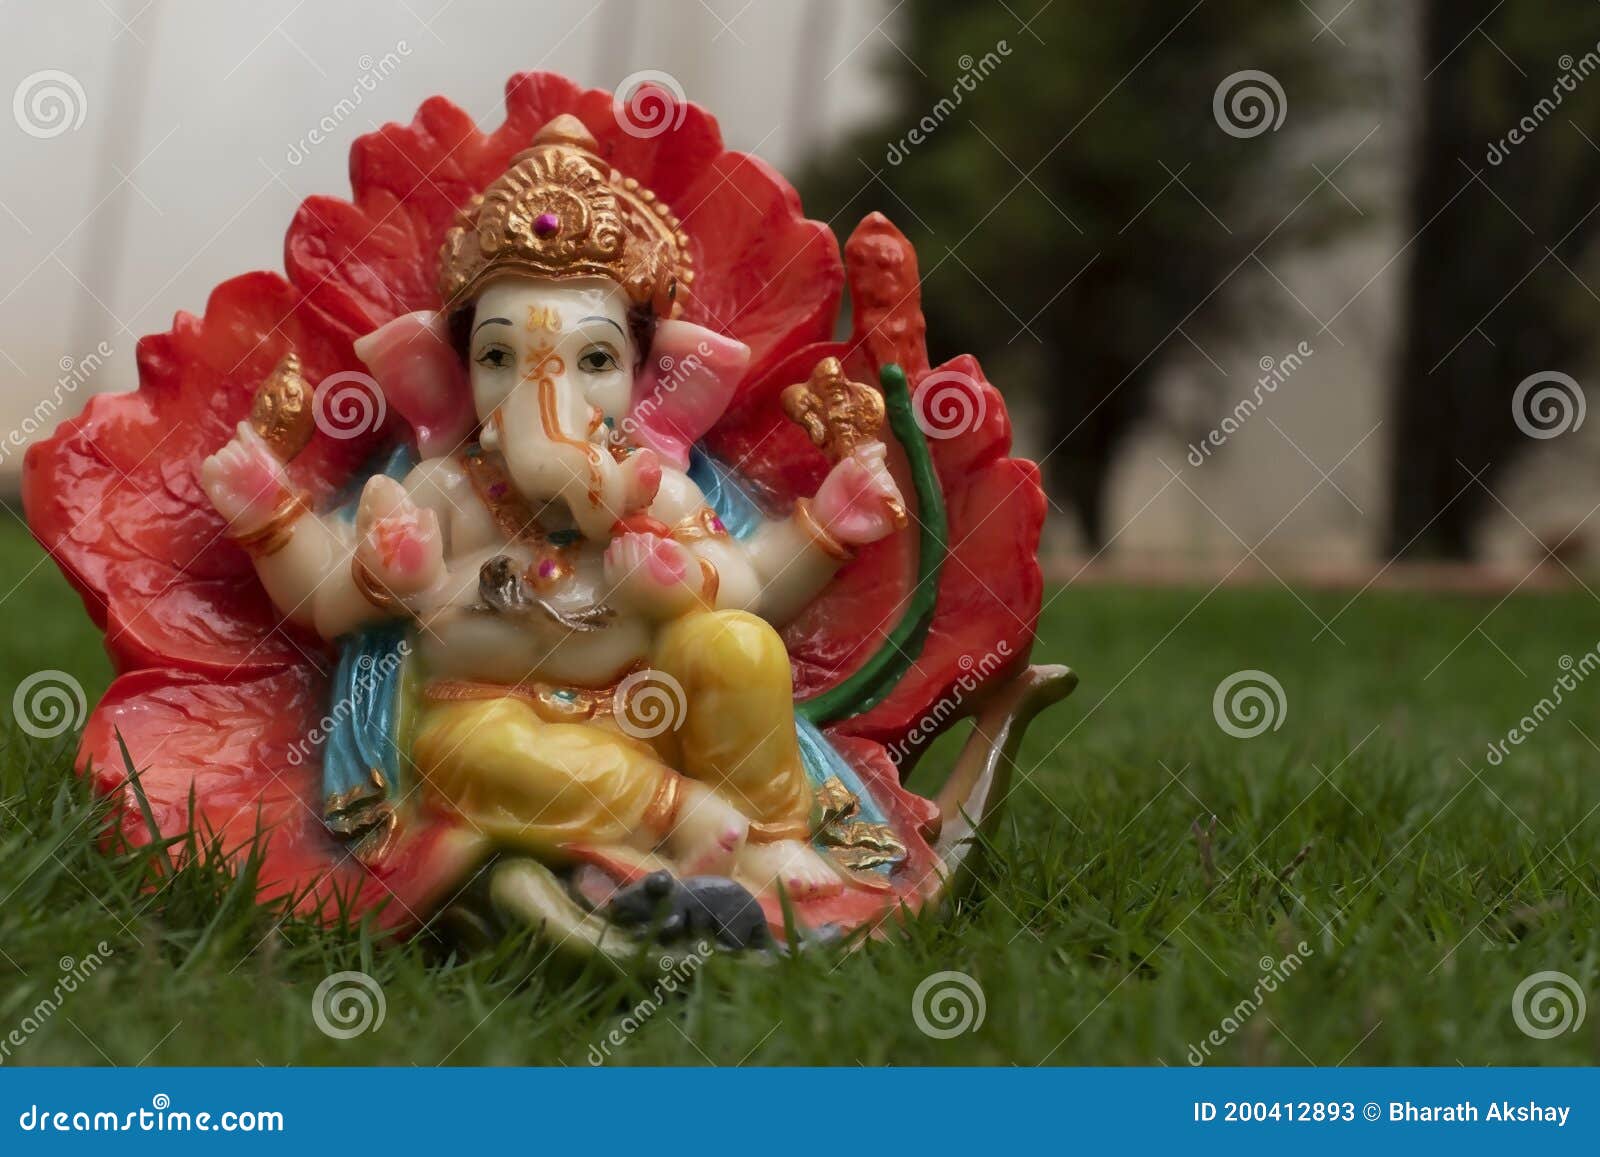 Beautiful Lord Ganesha Idol Stock Image - Image of colorful, faith ...